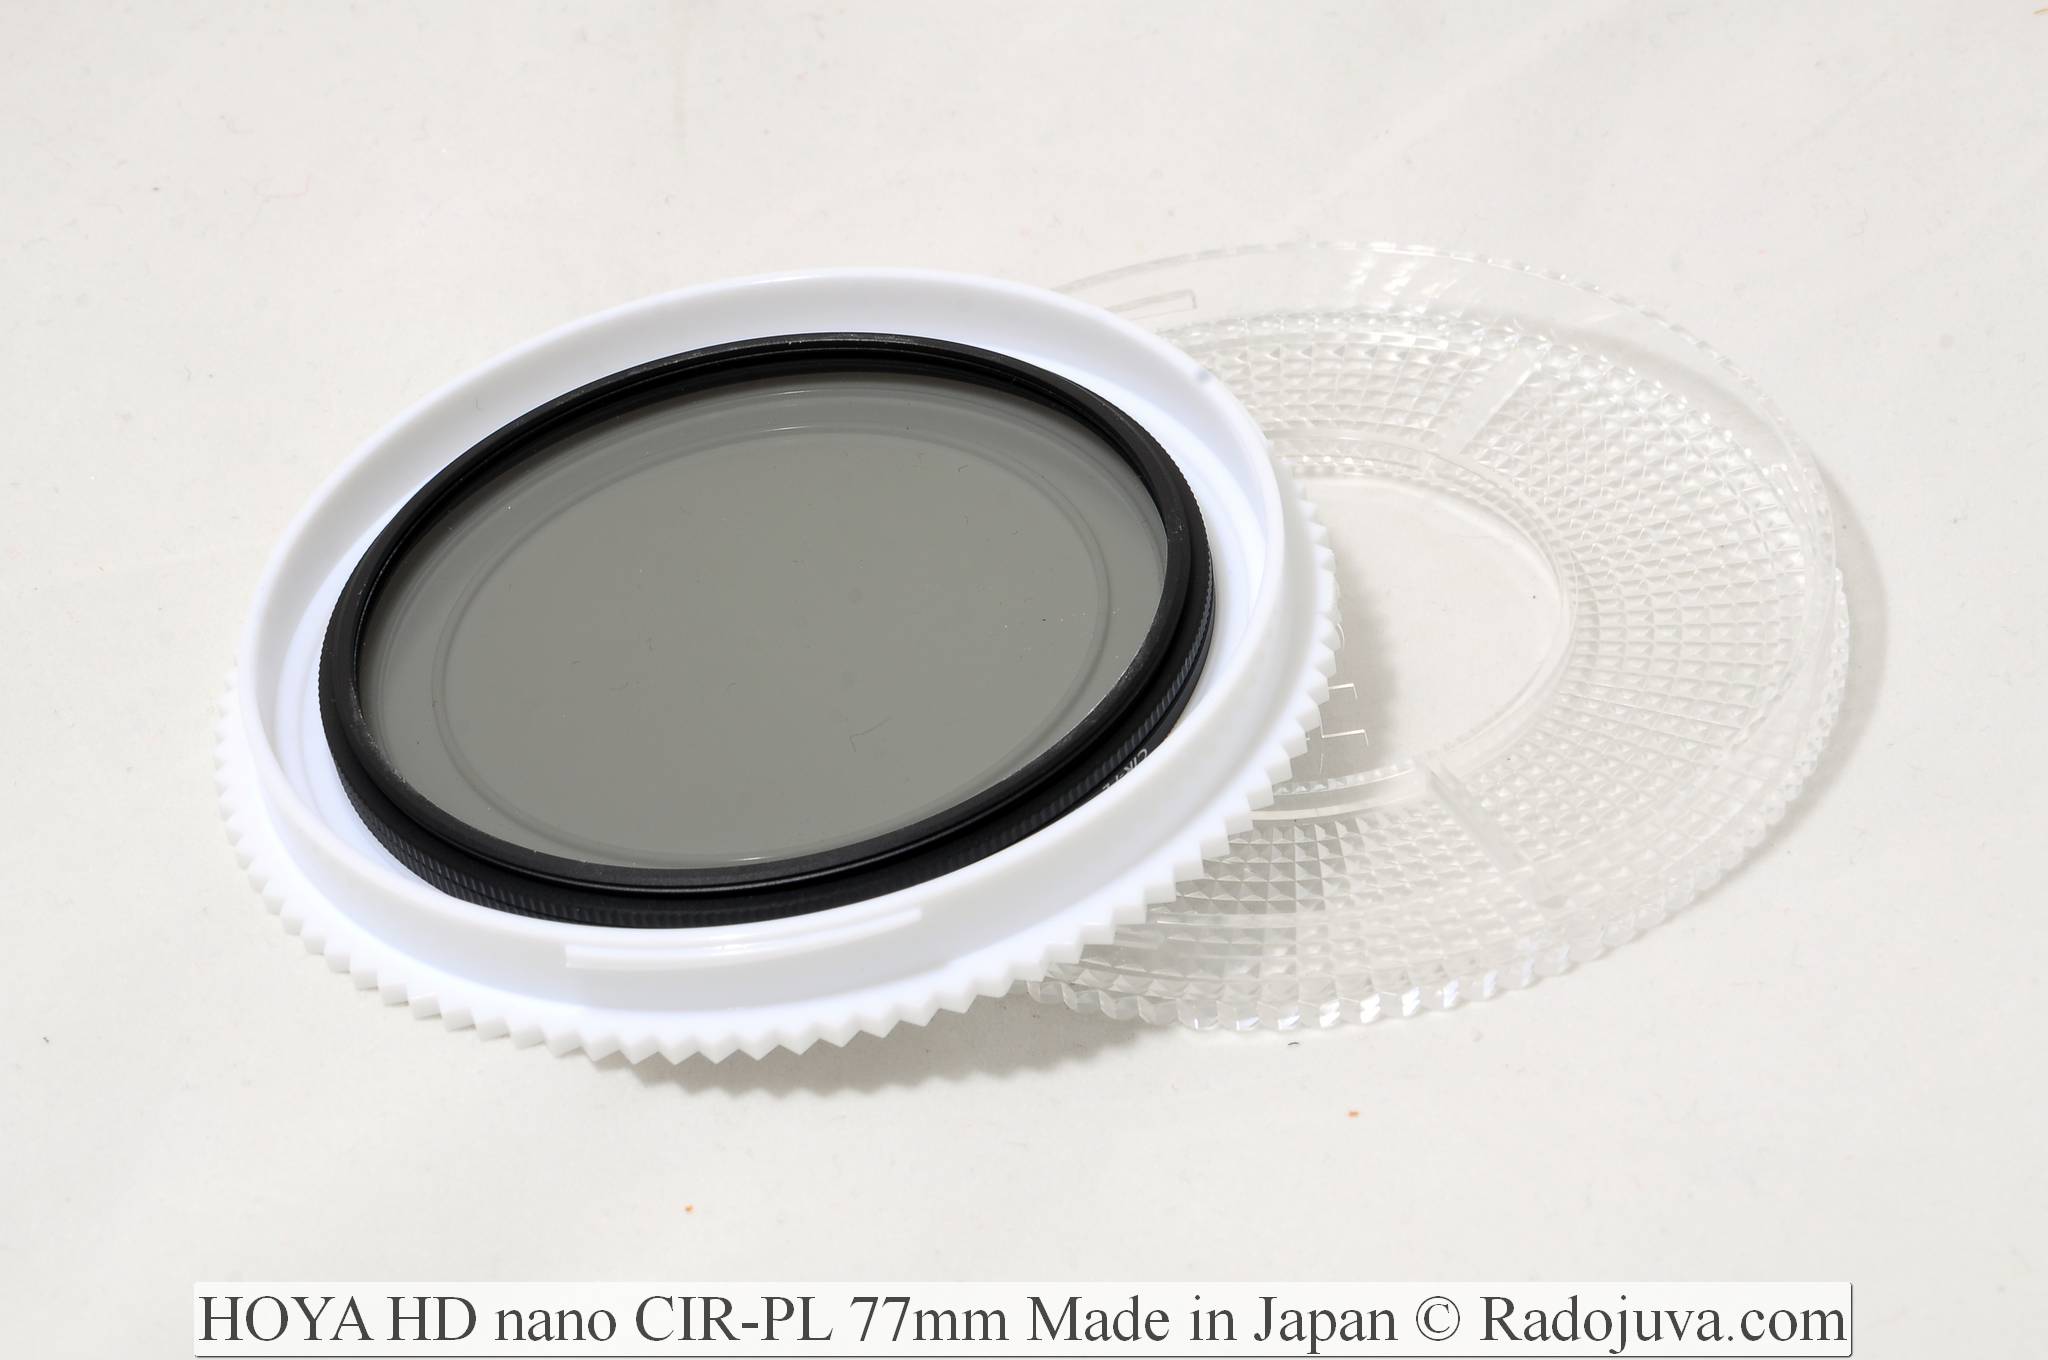 HOYA HD nano CIR-PL 77mm Made in Japan